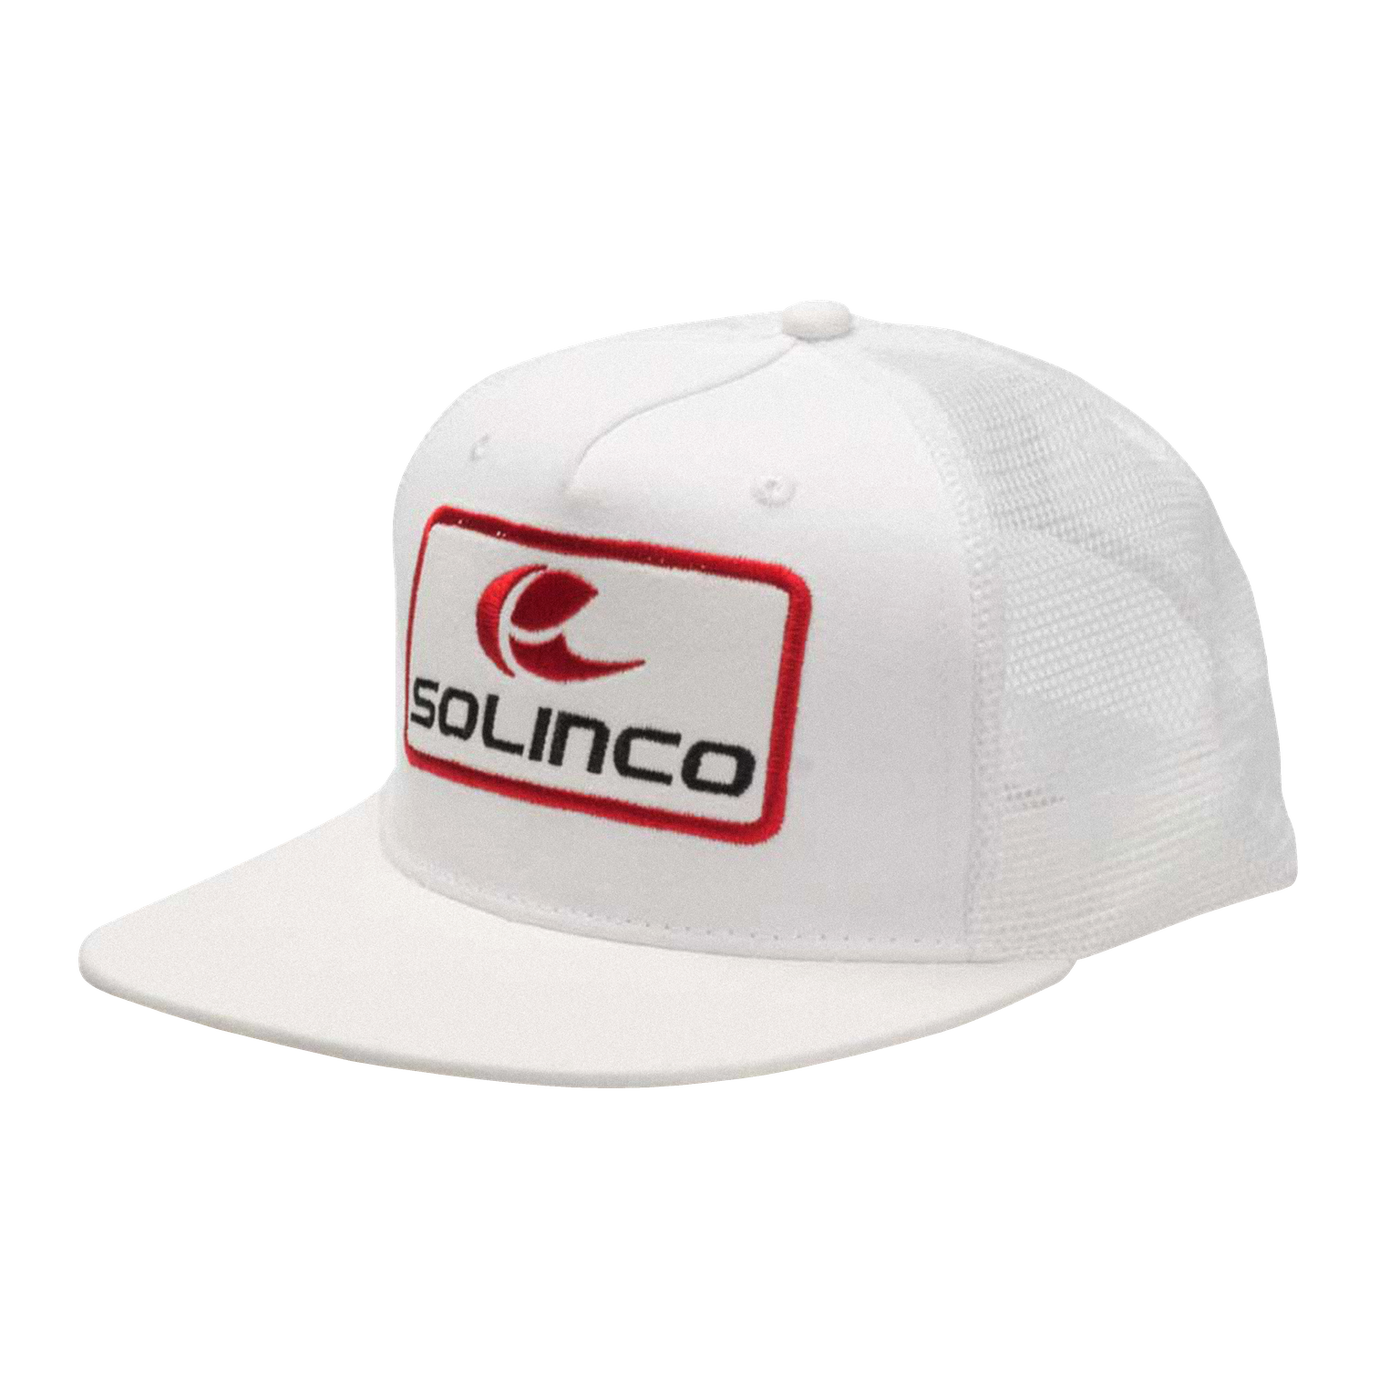 Solinco trucker kasket